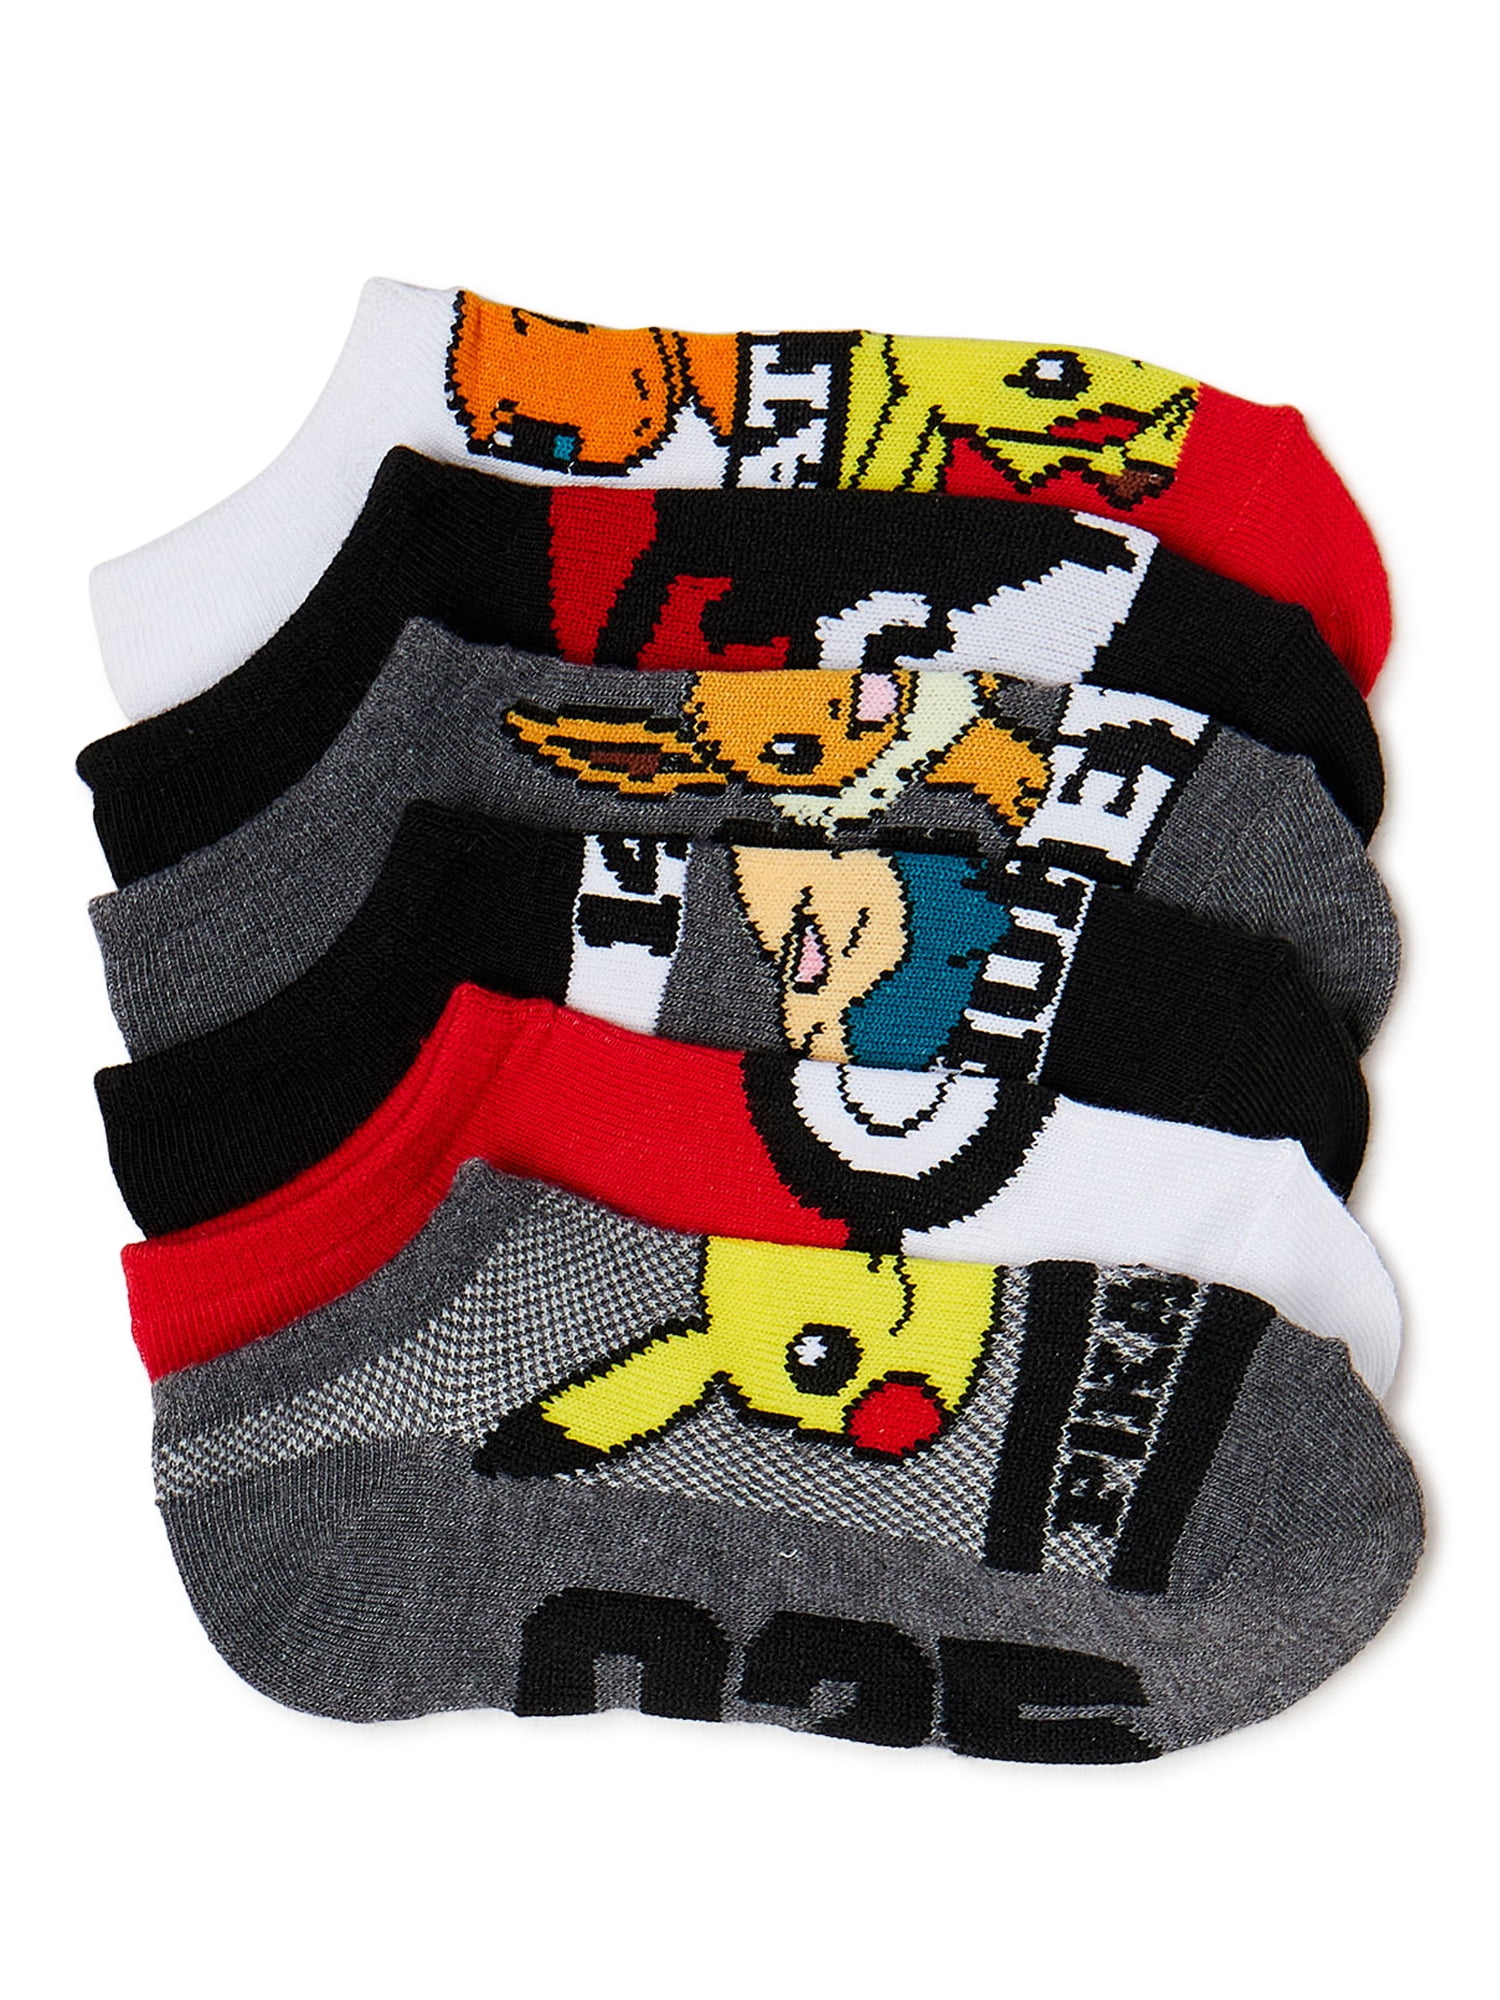 Despicable ME Minions Kids 3-Pair Socks 6-8.5 Shoe Size 10.5-2.5 NEW 